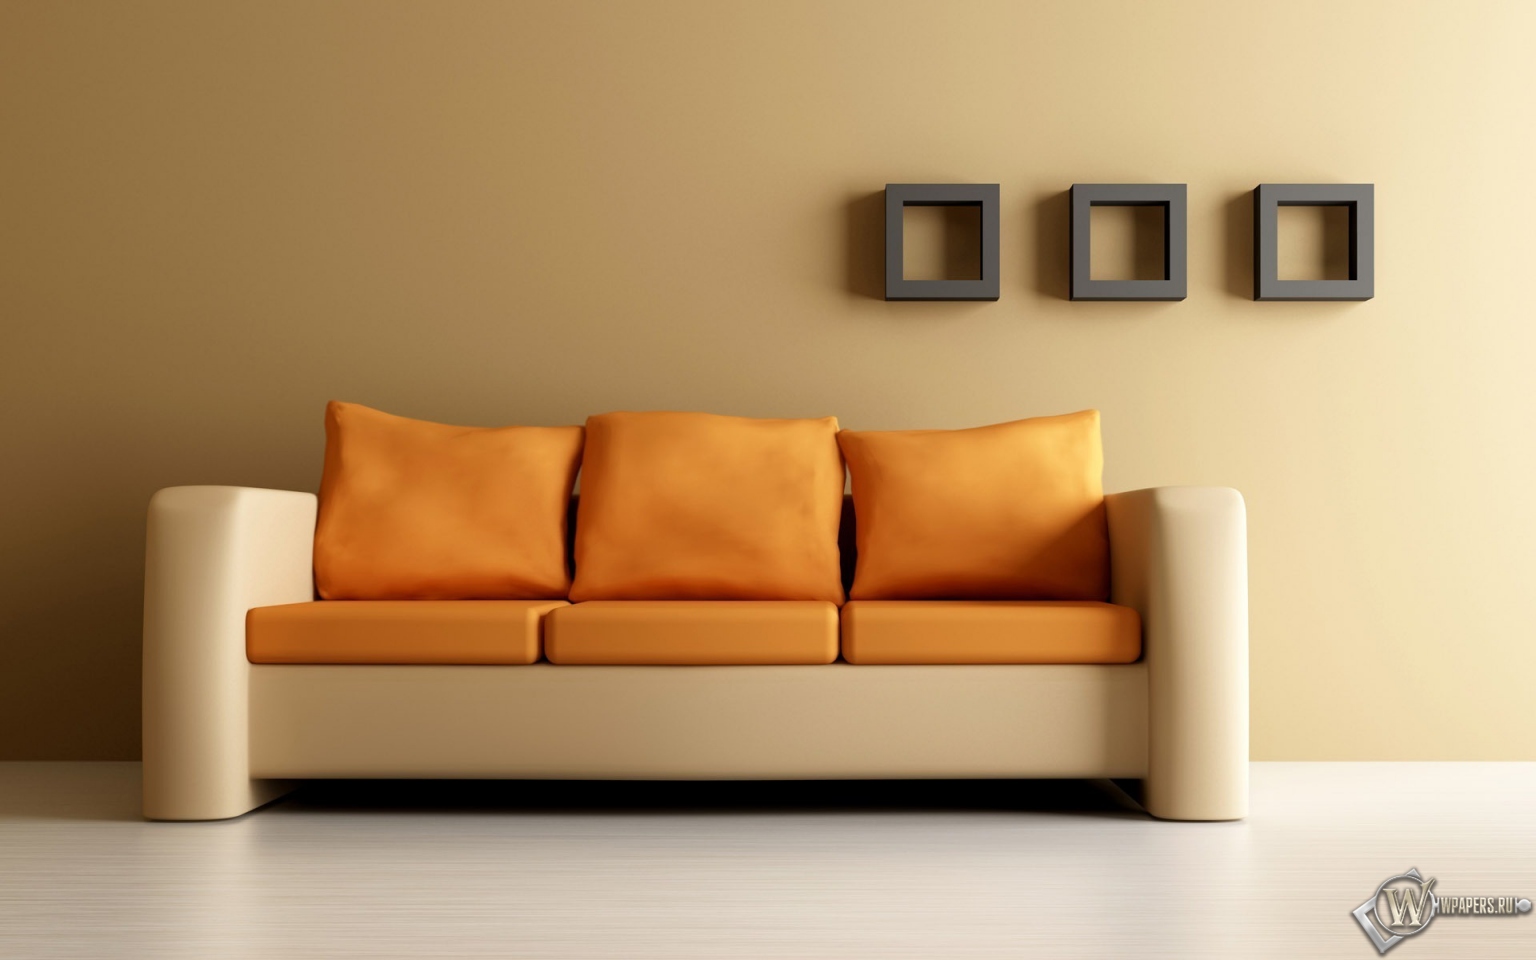 Оранжевый диван 1536x960